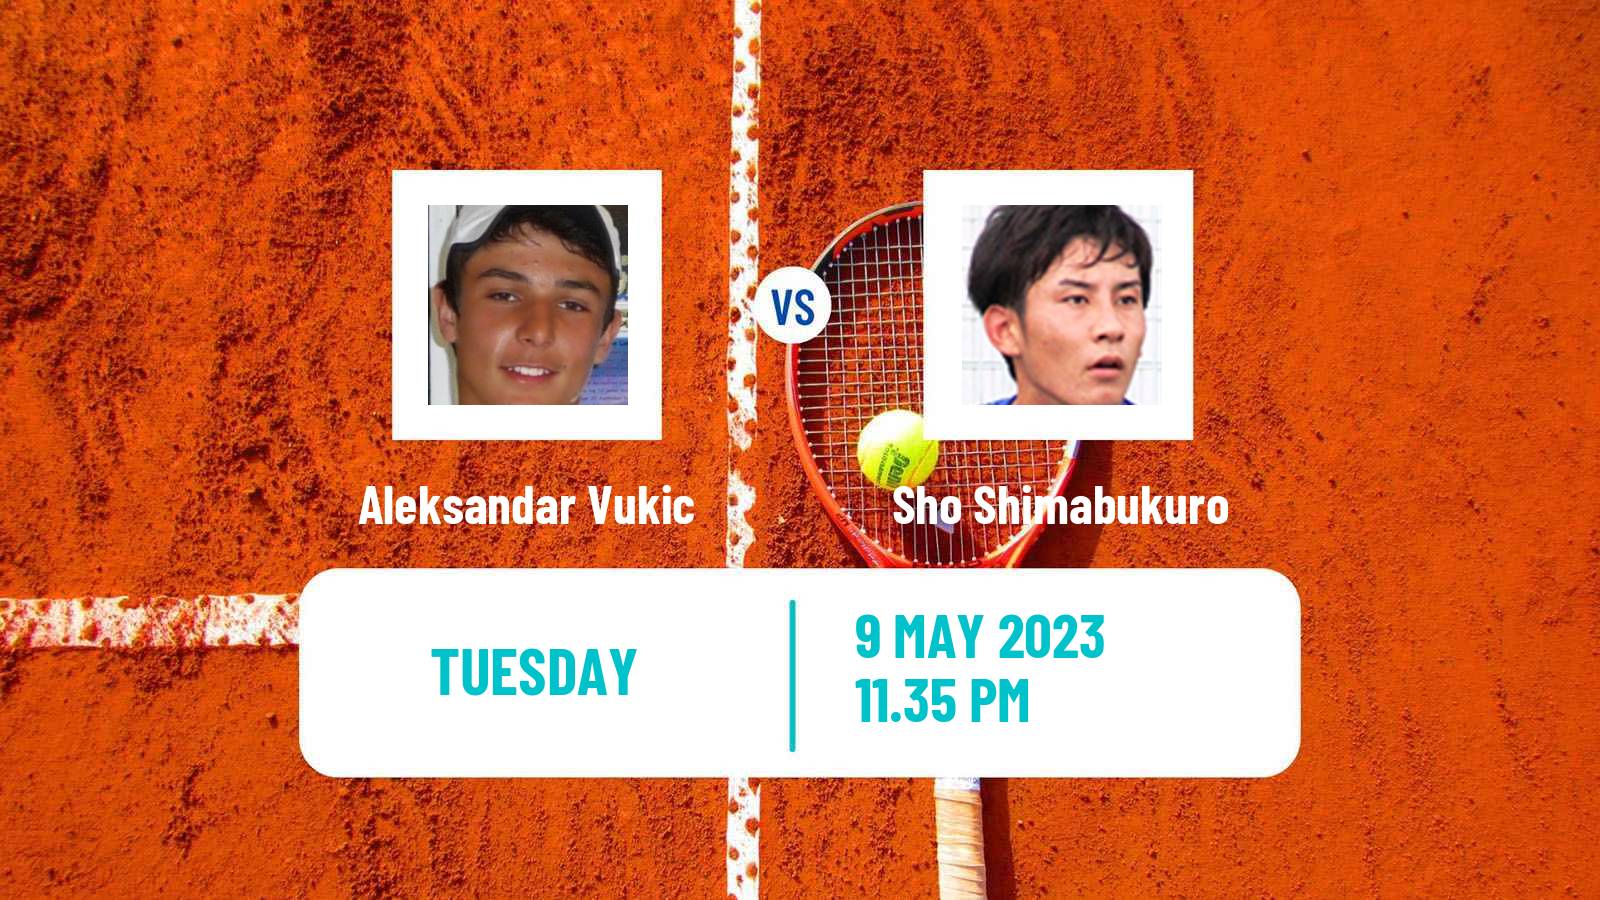 Tennis ATP Challenger Aleksandar Vukic - Sho Shimabukuro